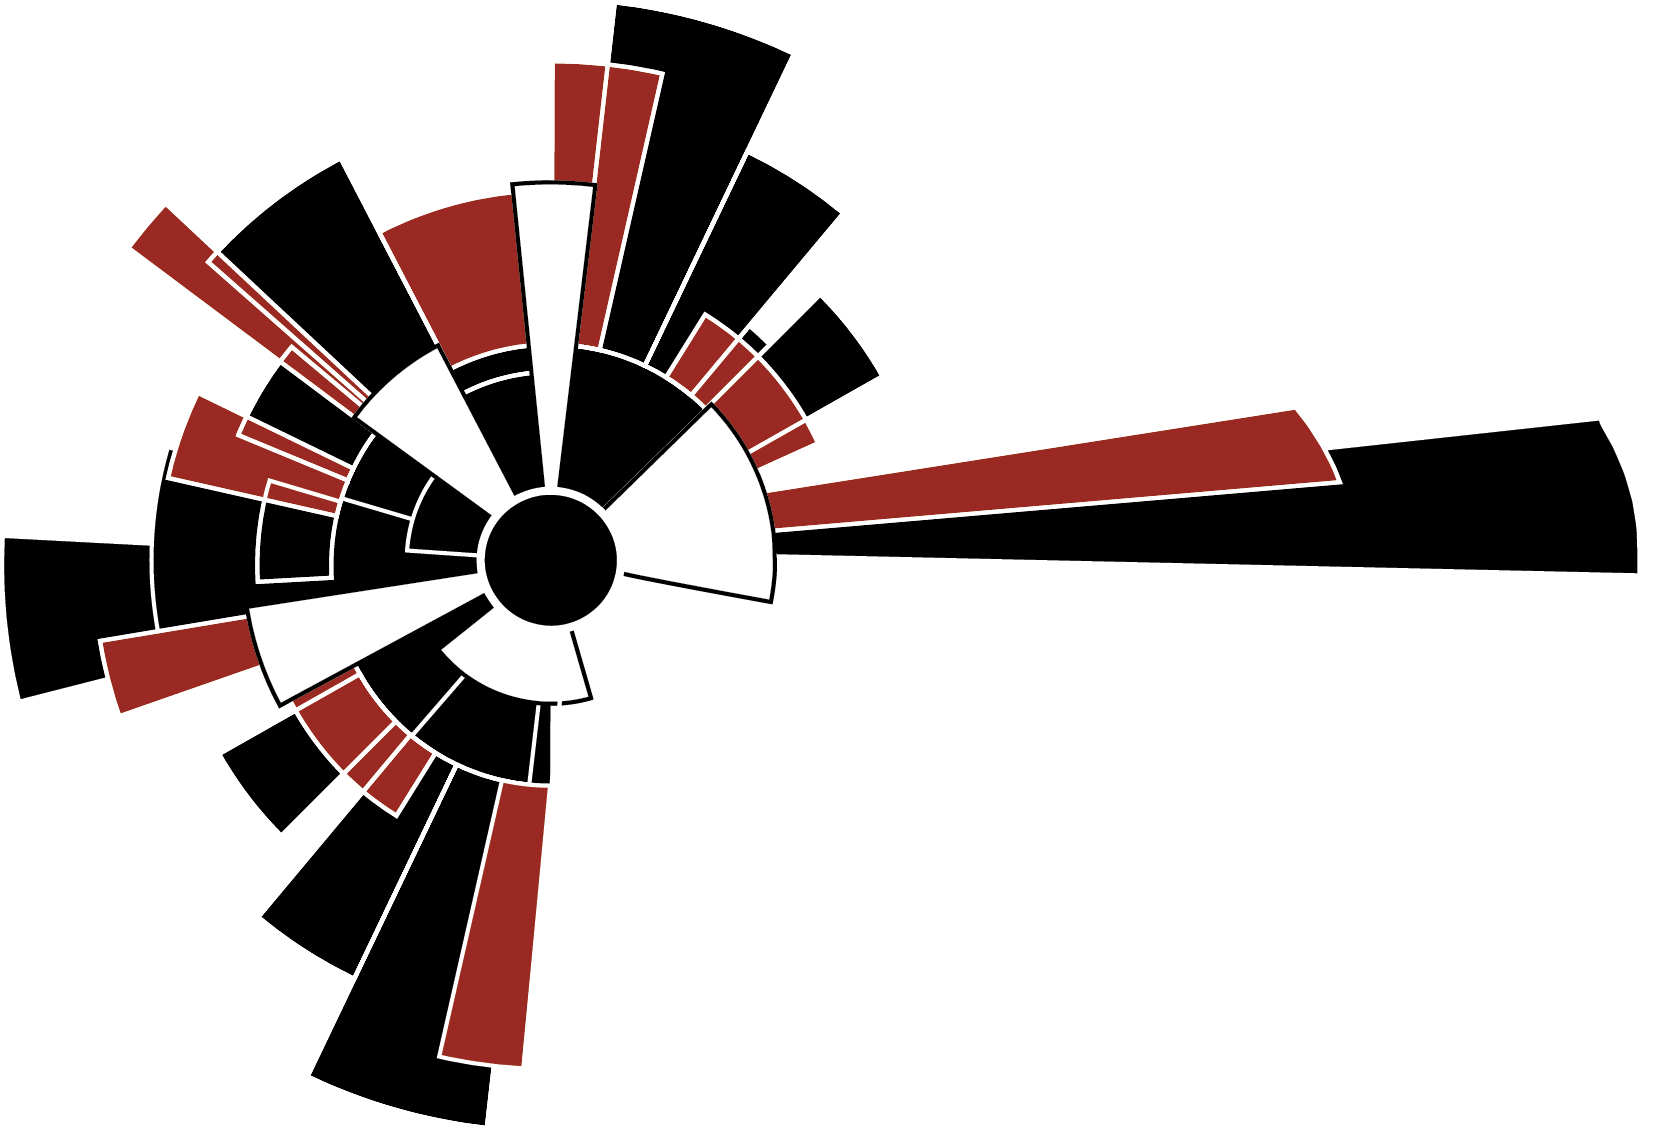 The Yokohama Theatre Group